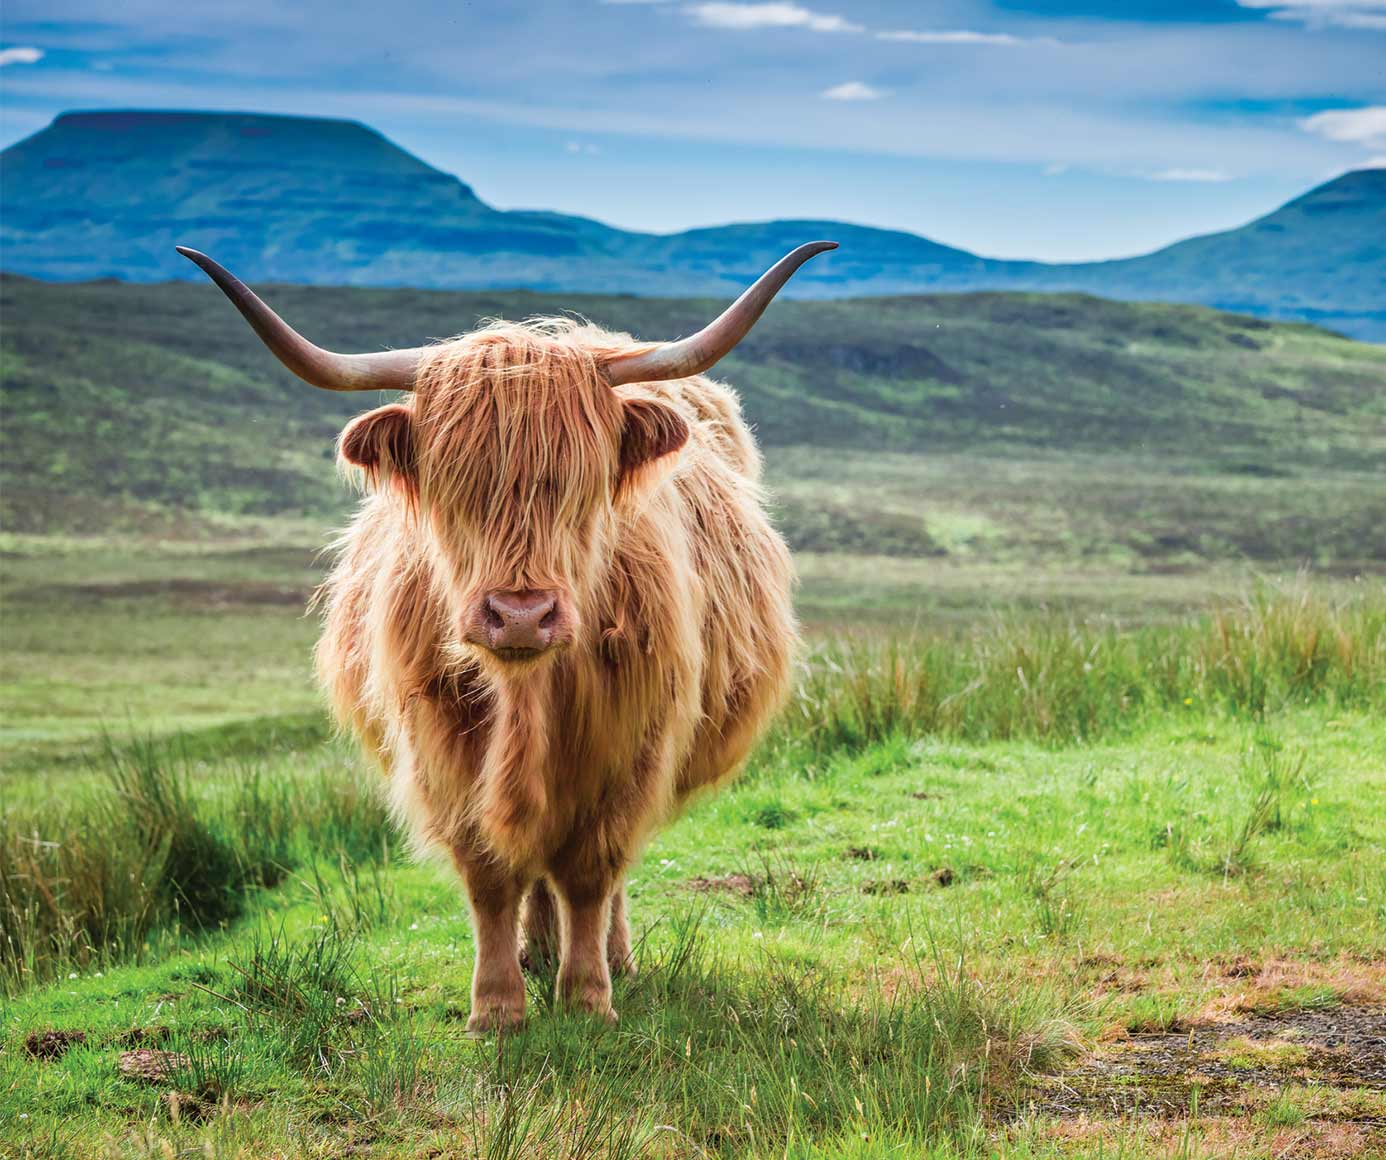 Benny's Bistro uses highland steer beef